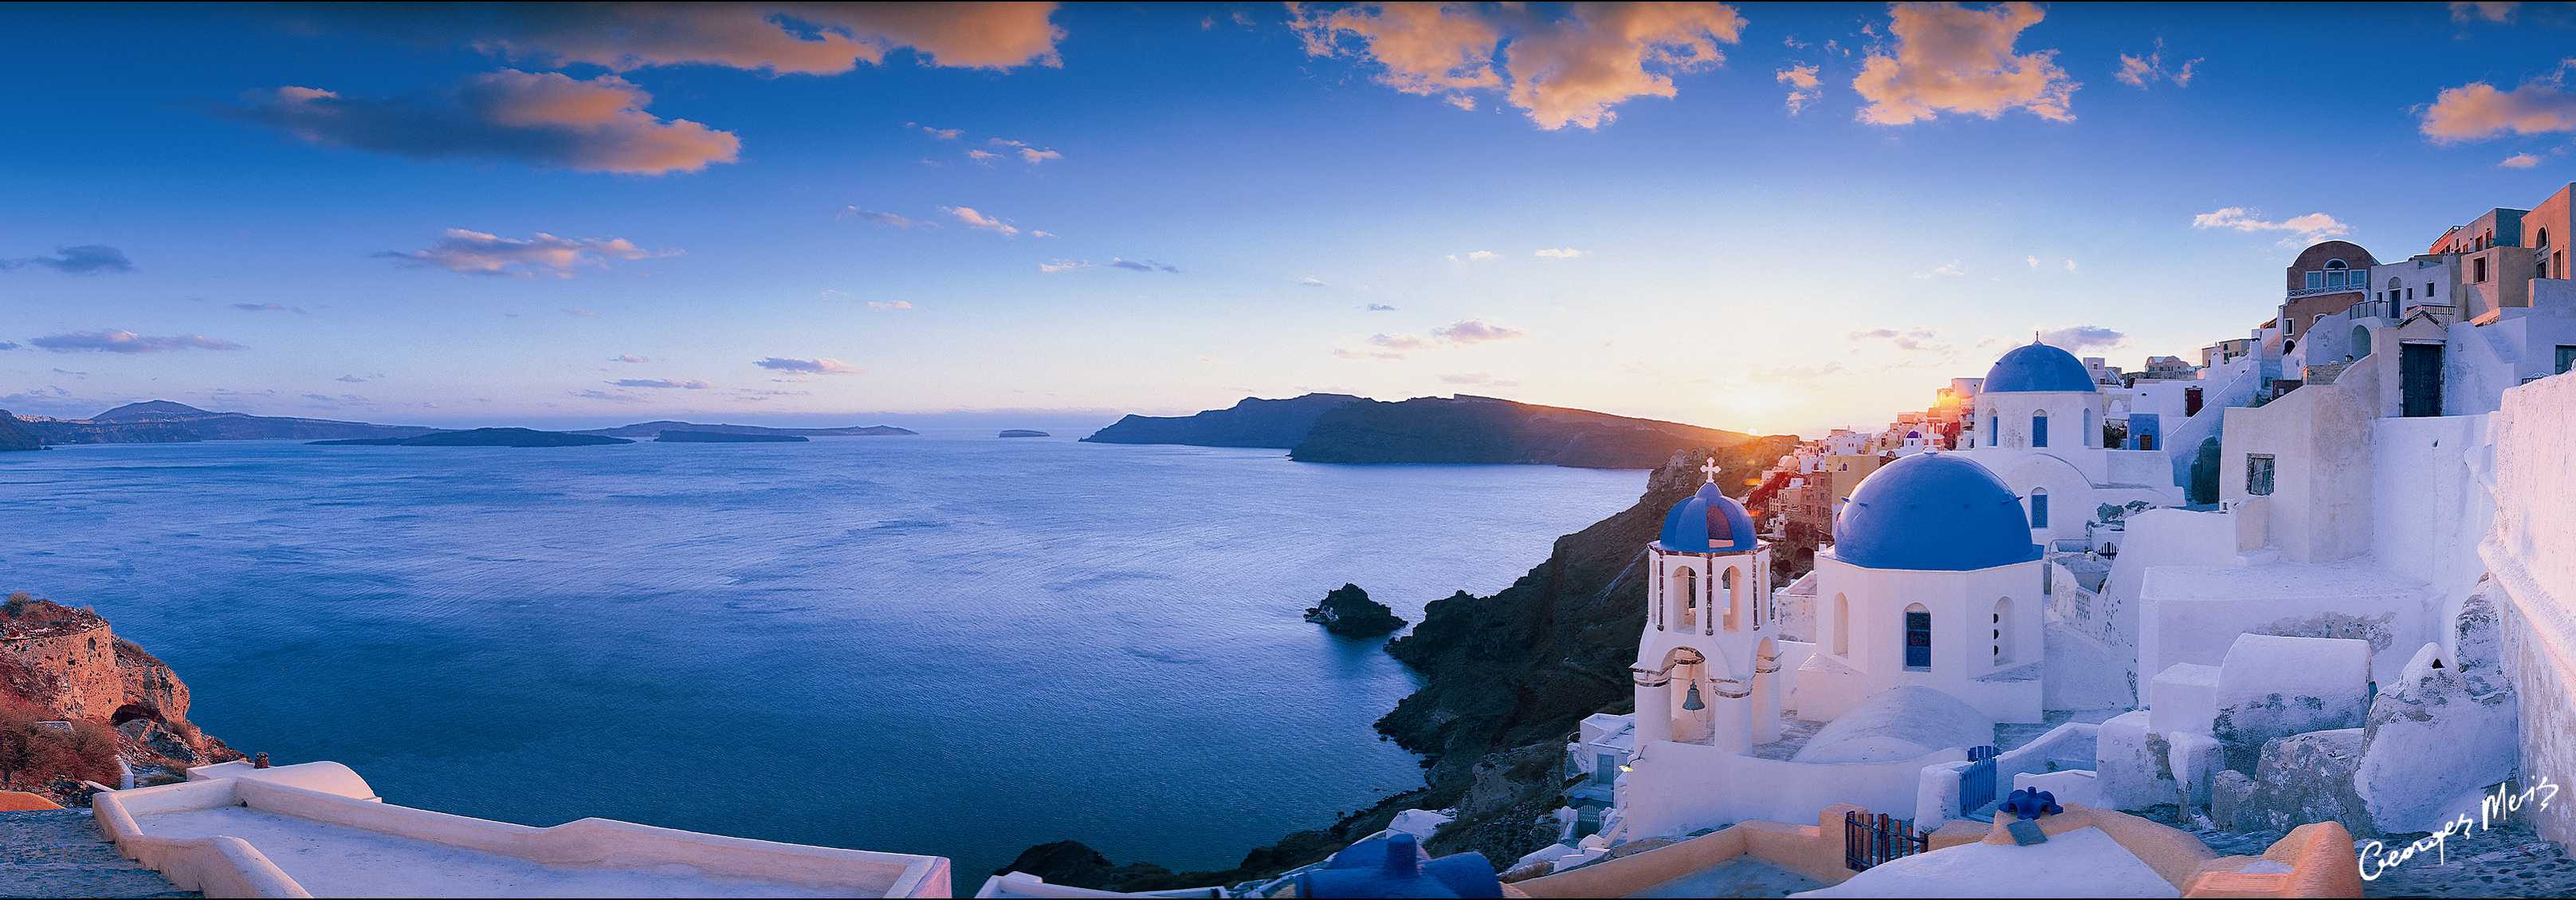 Santorini Greece Desktop Wallpaper On